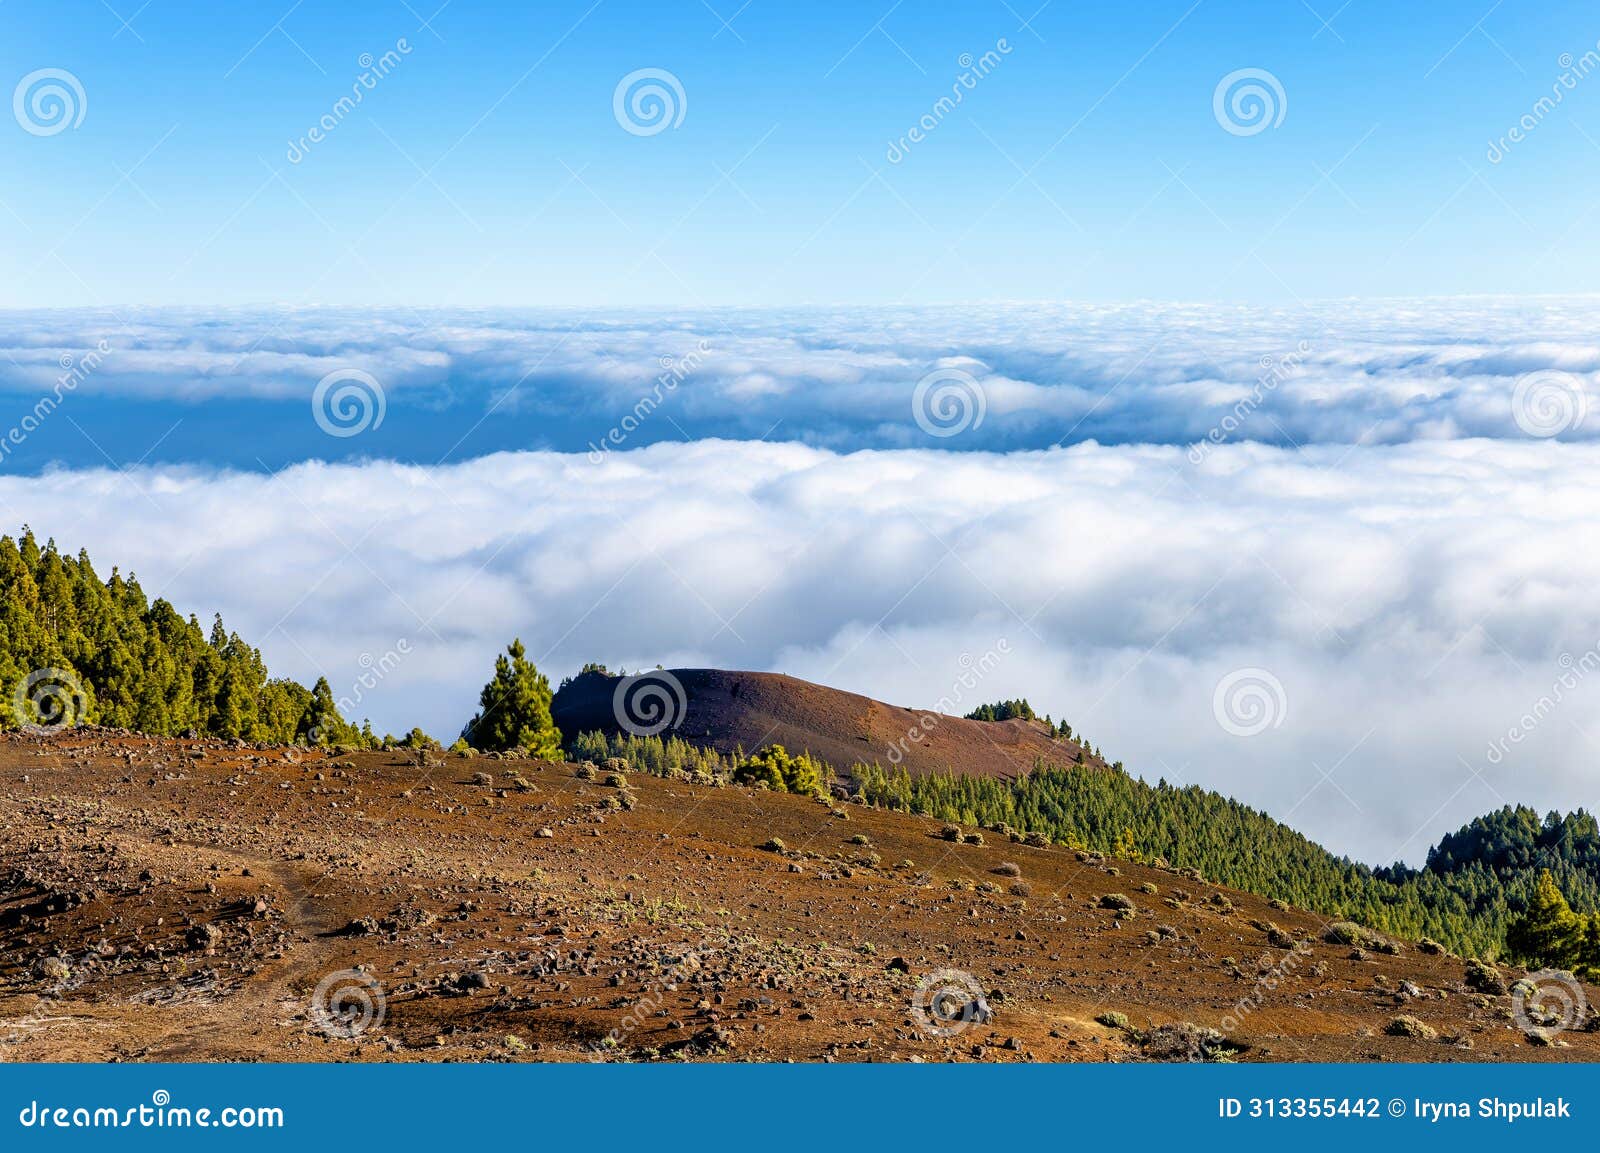 volcanic landscape along ruta de los volcanes, cumbre vieja, island la palma, canary islands, spain, europe